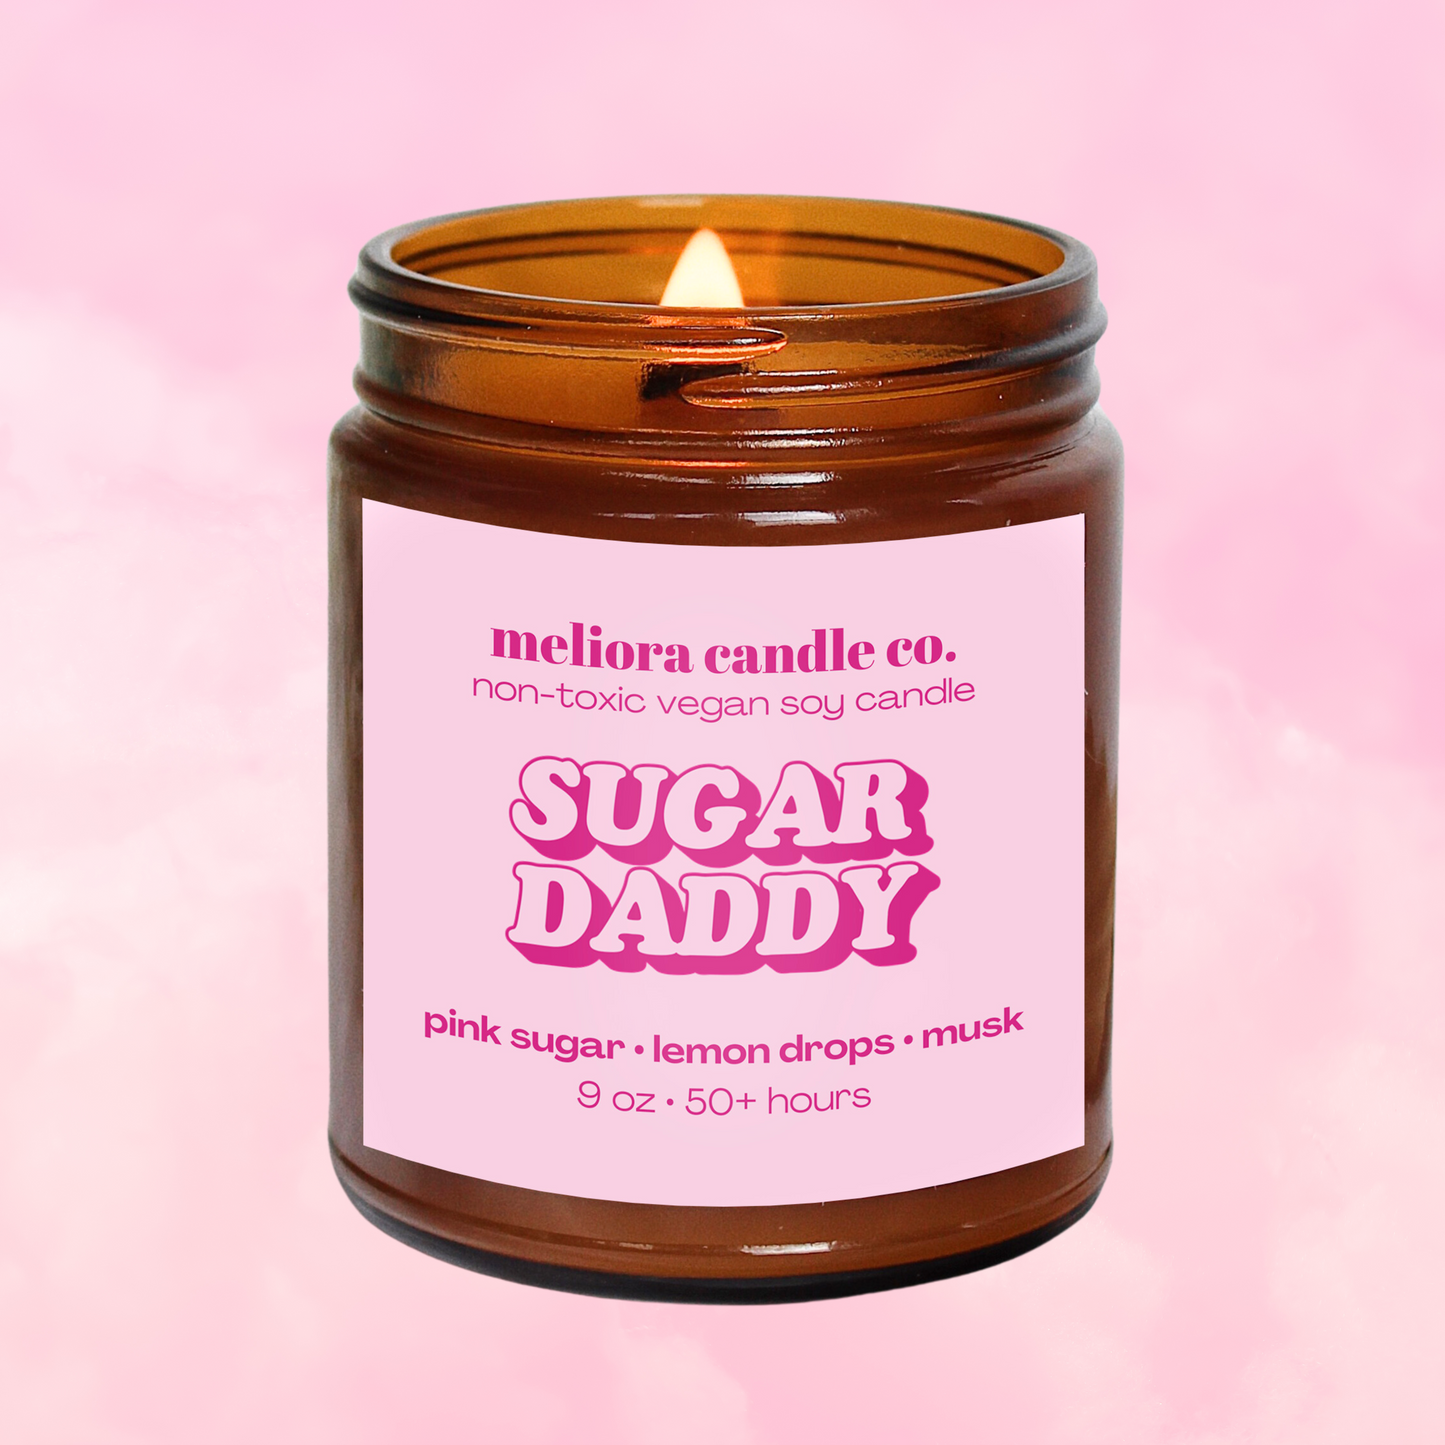 sugar daddy - pink sugar, lemon drops, and musk